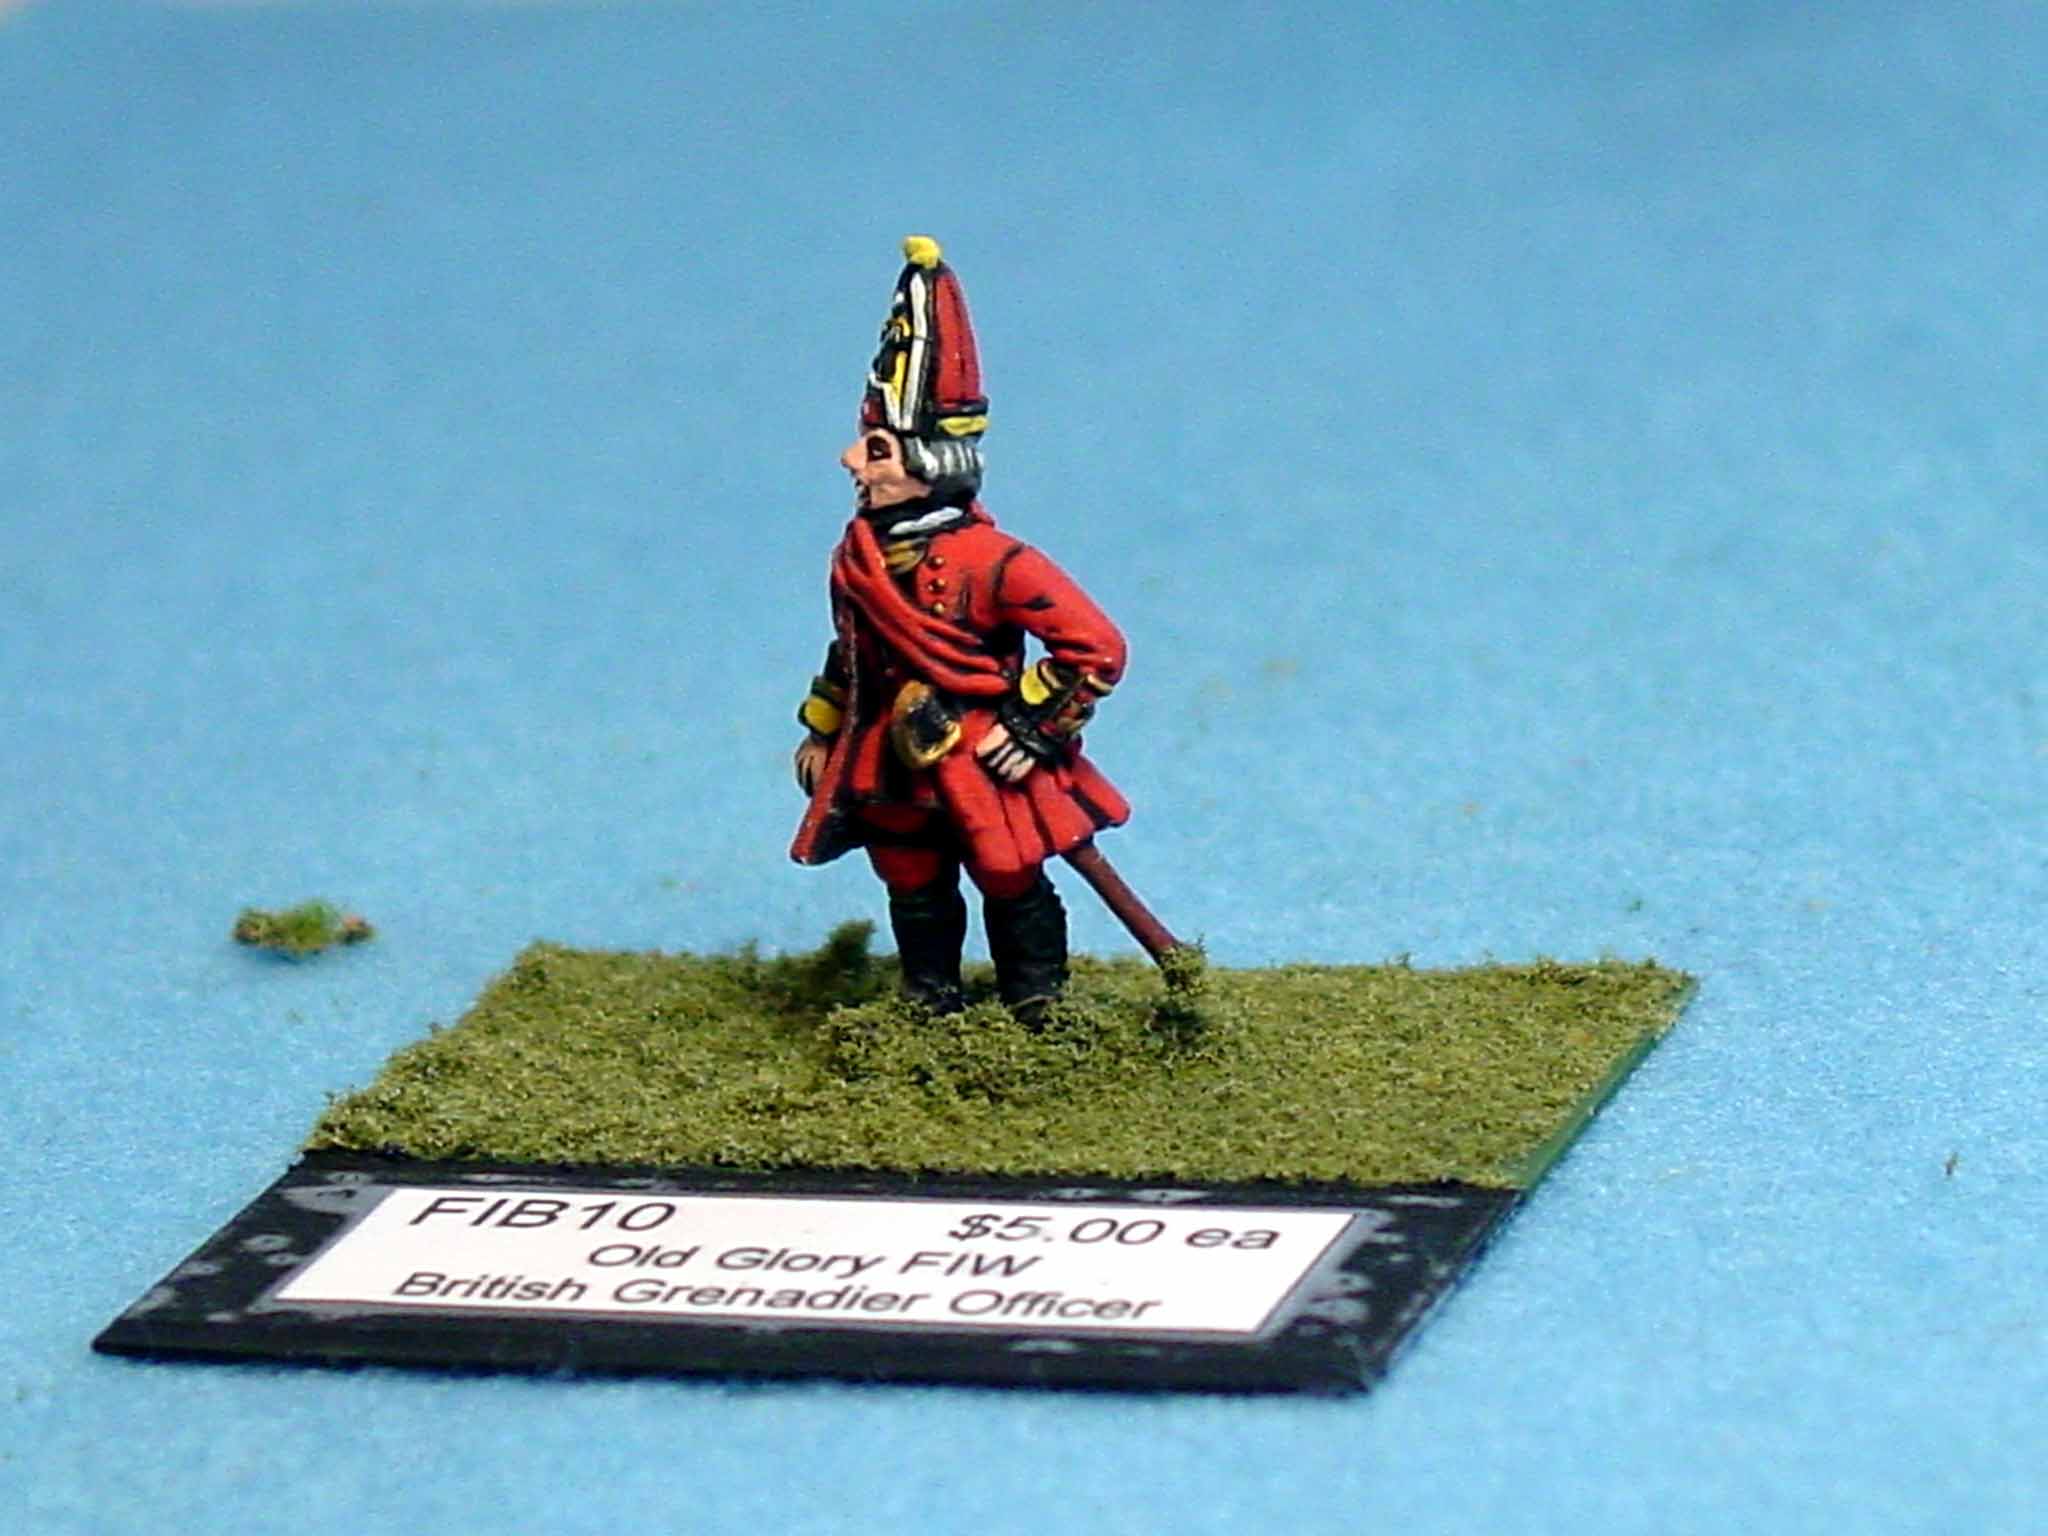 British Grenadier Colonel